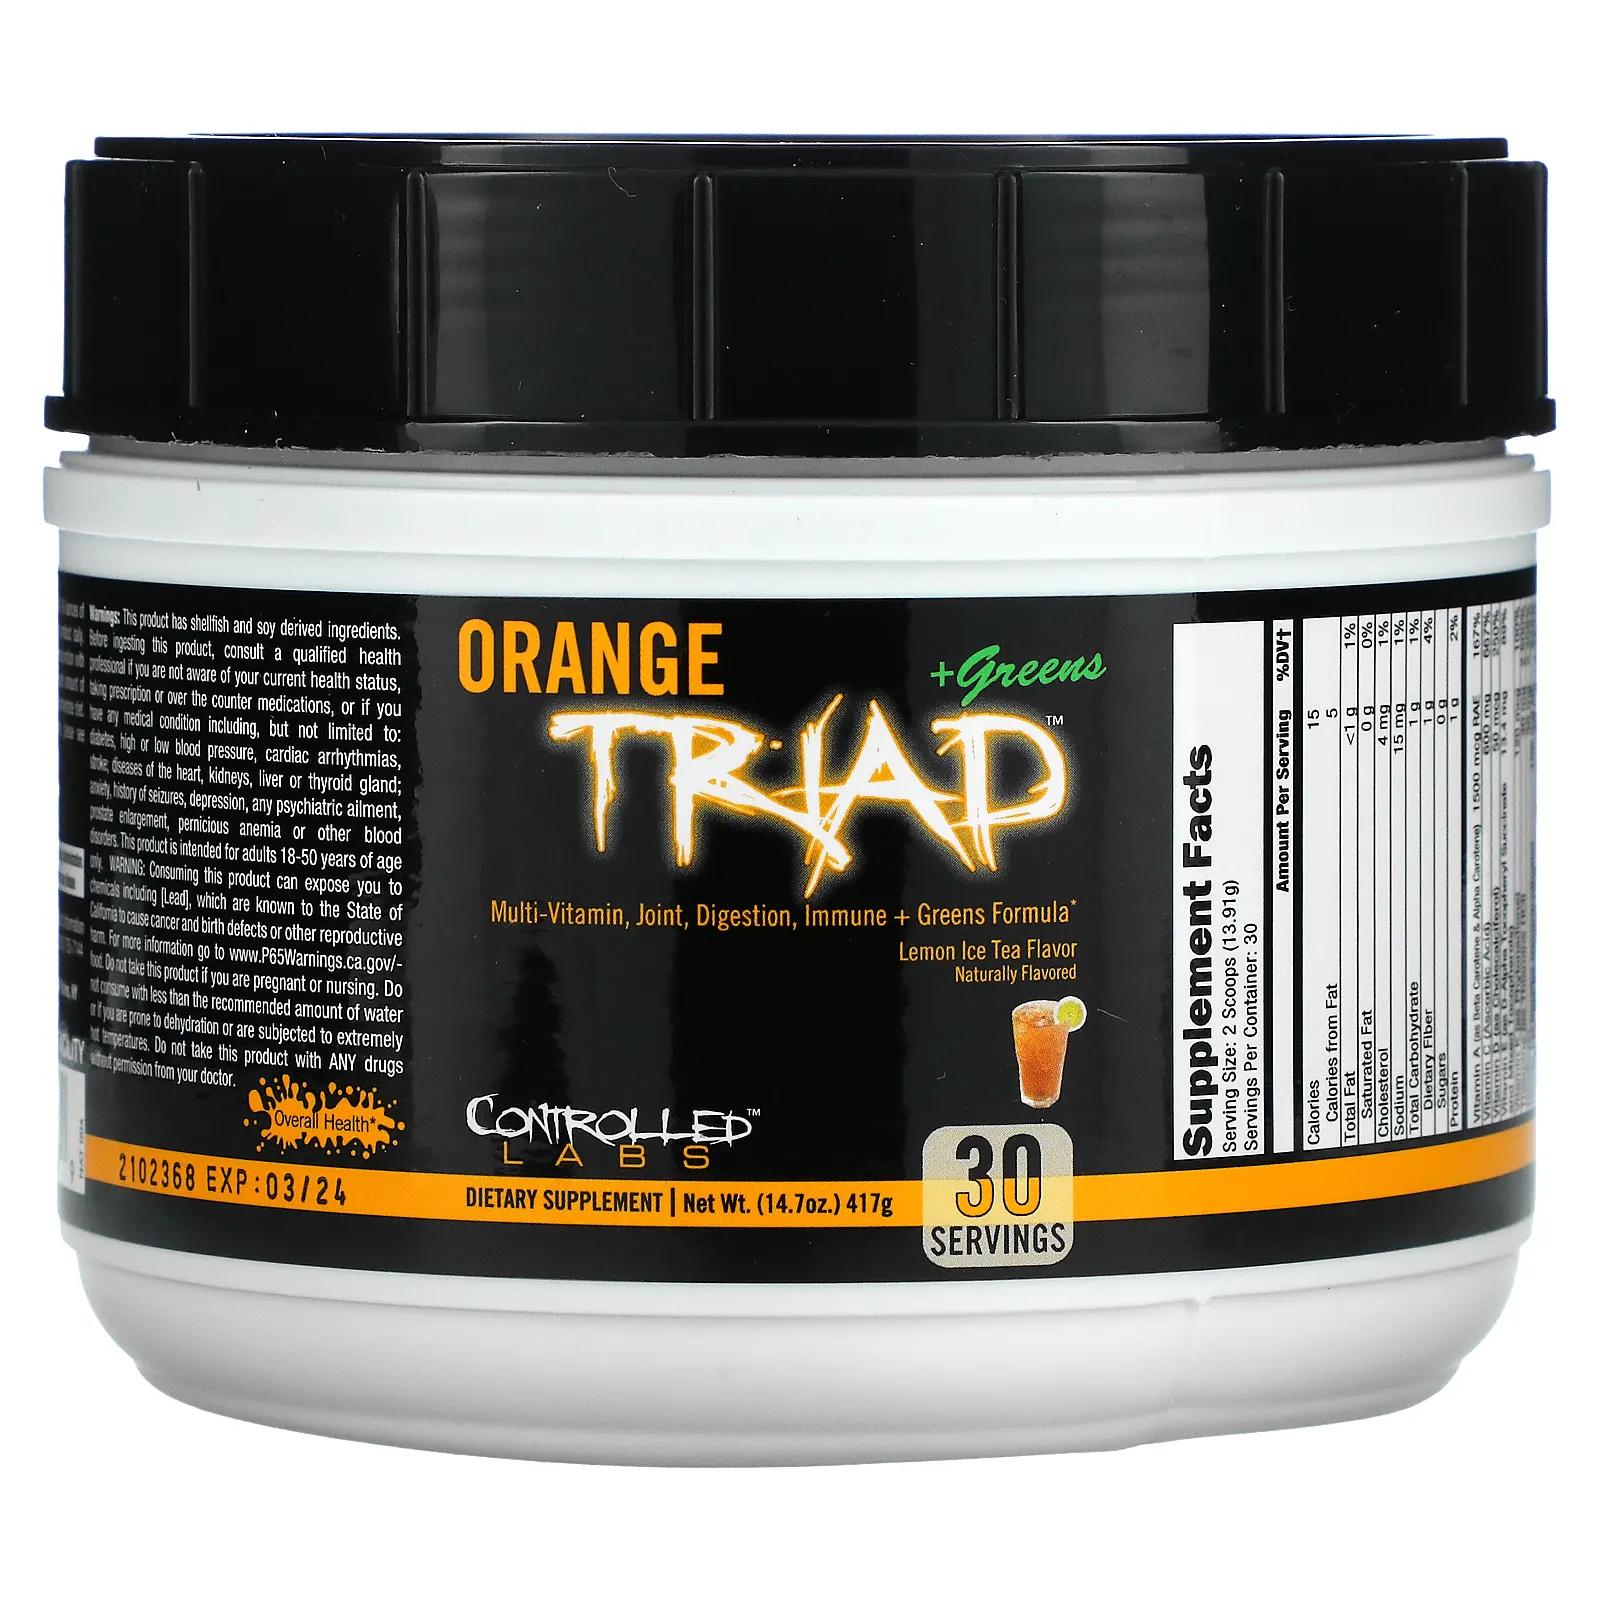 Controlled Labs Orange Triad + Greens Лимонный чай со льдом 417 грамм